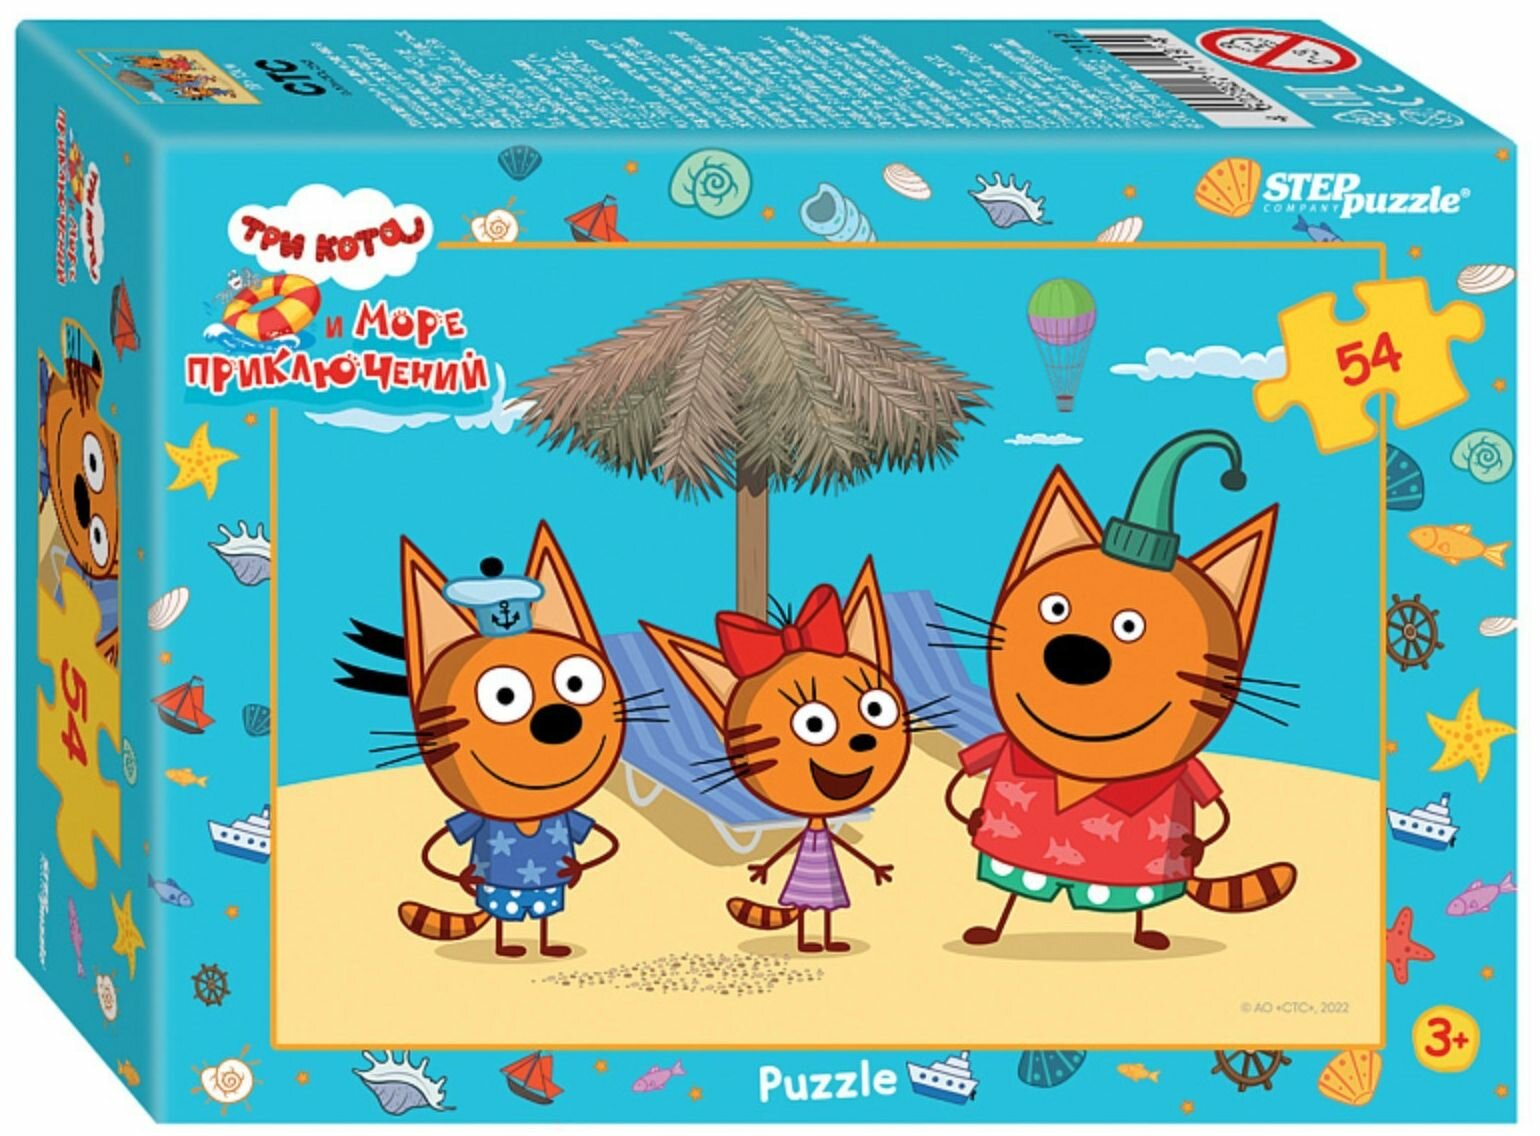 Детский пазл "Три кота и море приключений", игра-головоломка паззл для детей, Step Puzzle, 54 детали